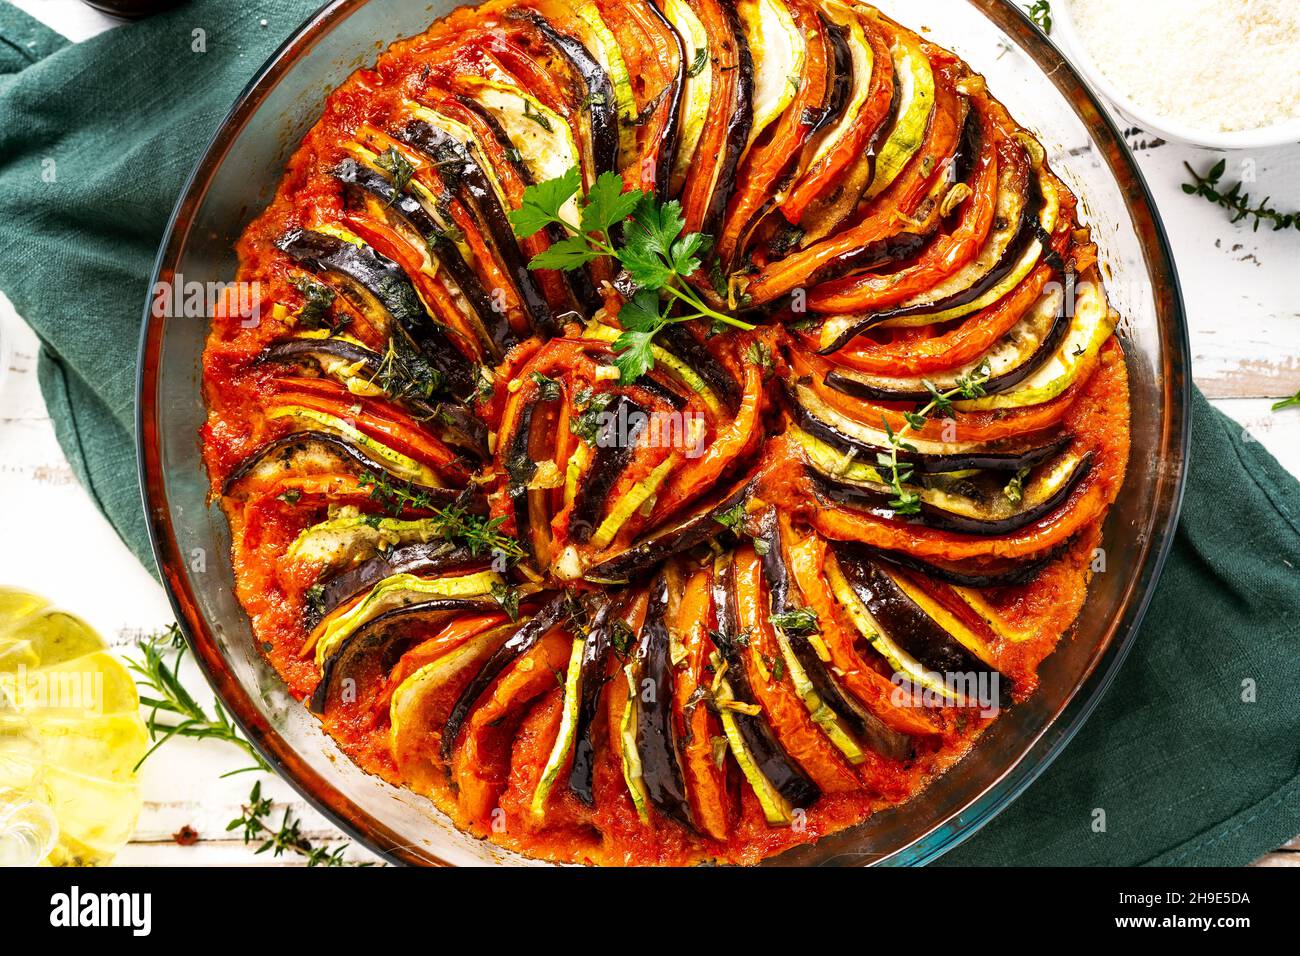 Provance tradininal vegetable dish ratatouille Stock Photo